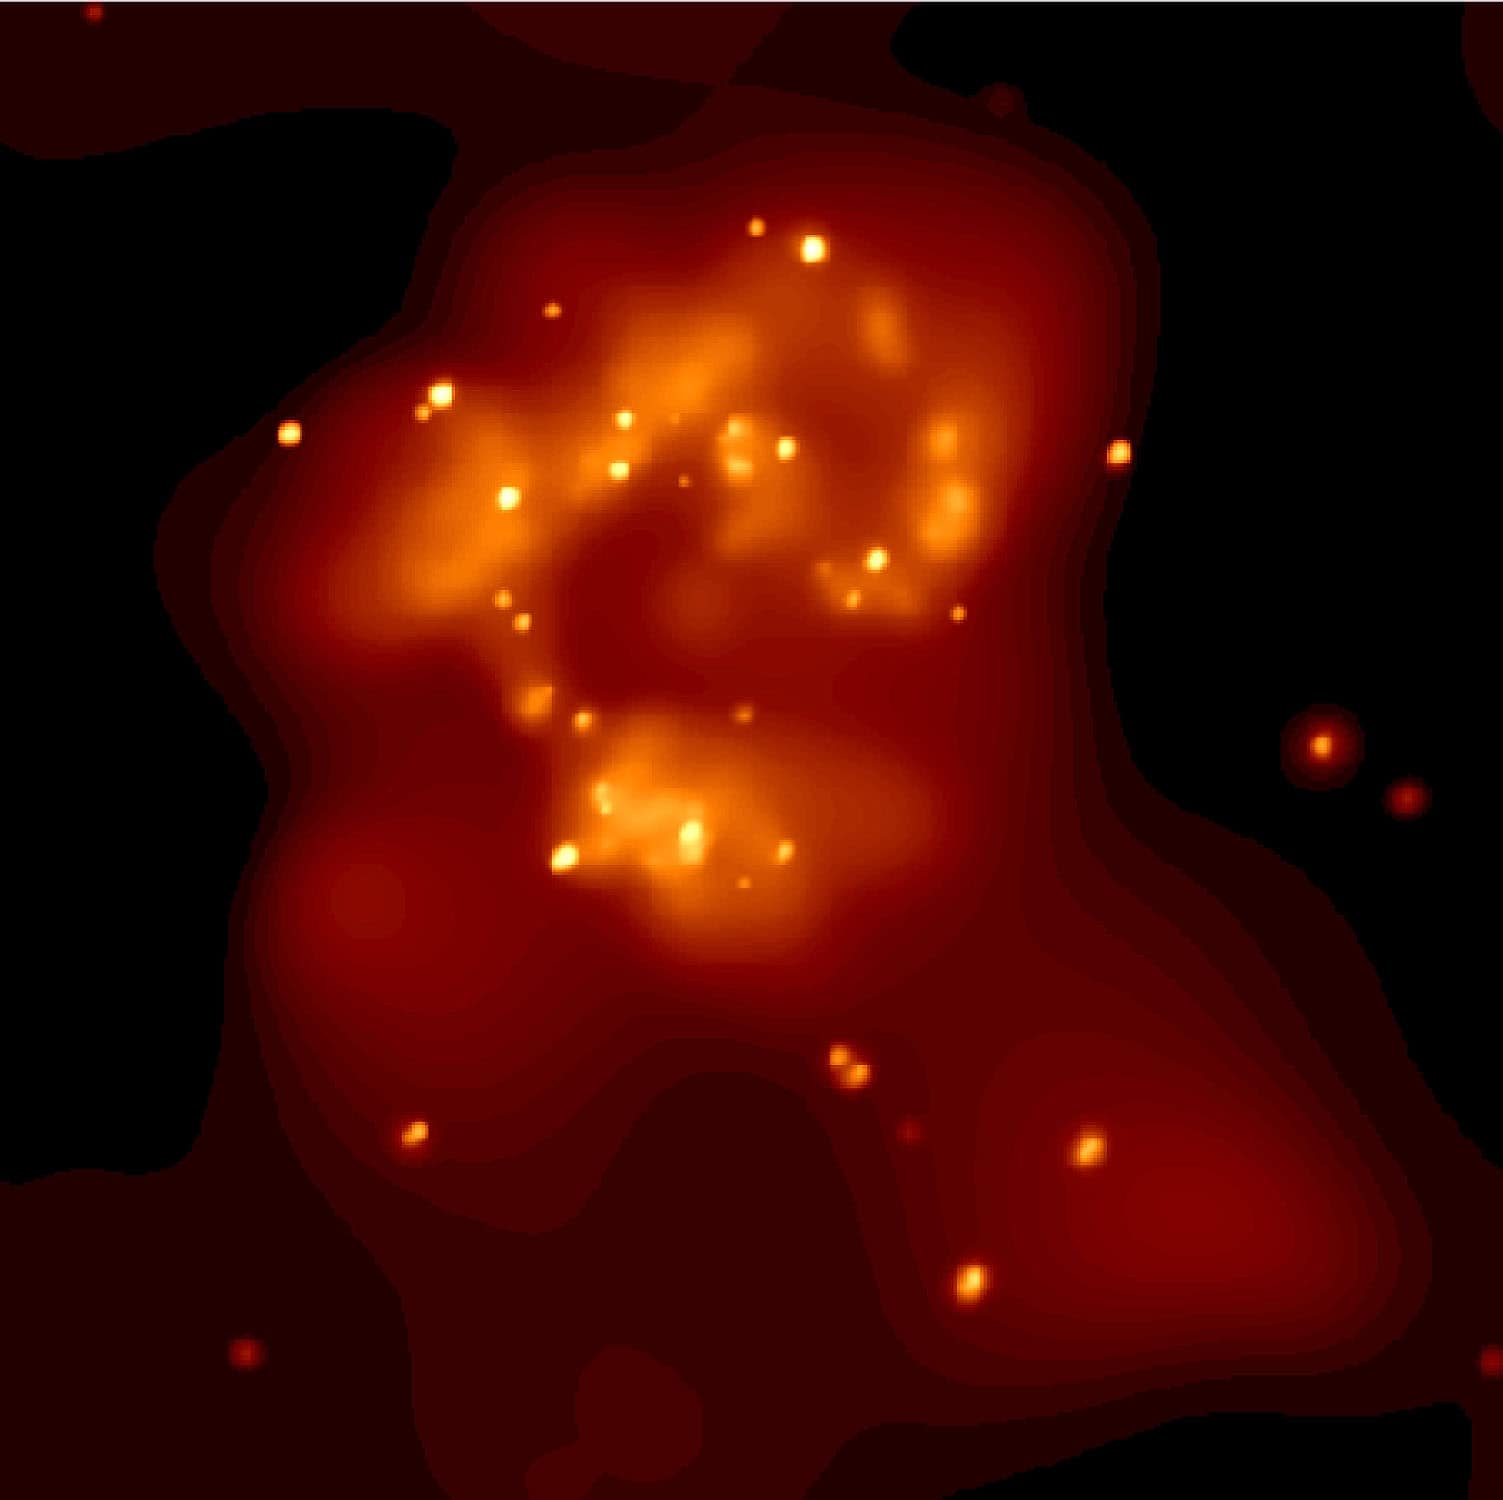 Galactic Collision in Constelation Corvus